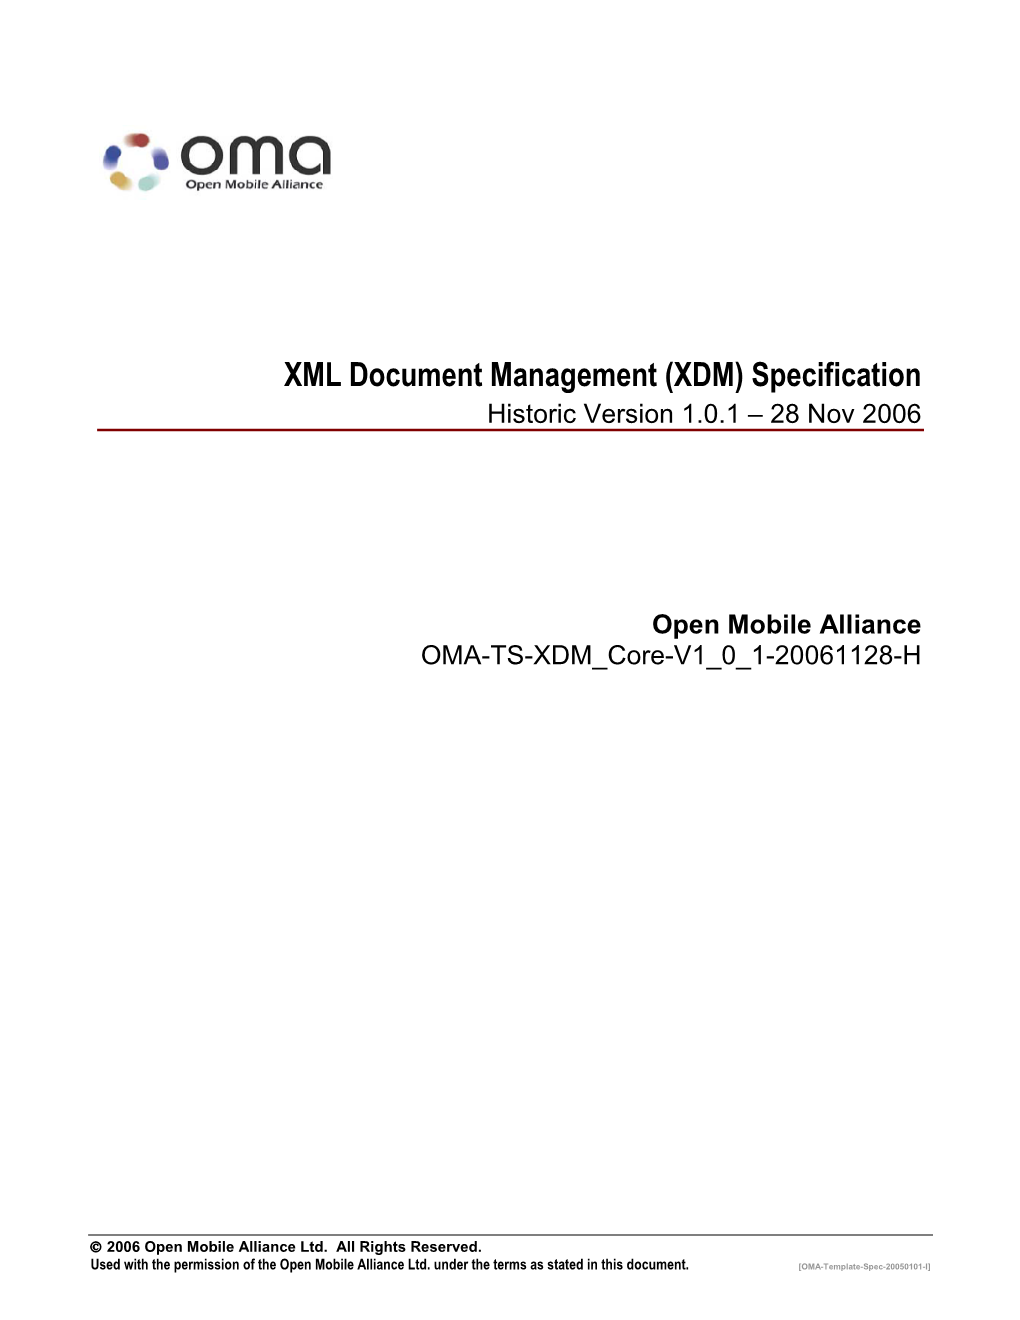 XML Document Management (XDM) Specification Historic Version 1.0.1 – 28 Nov 2006